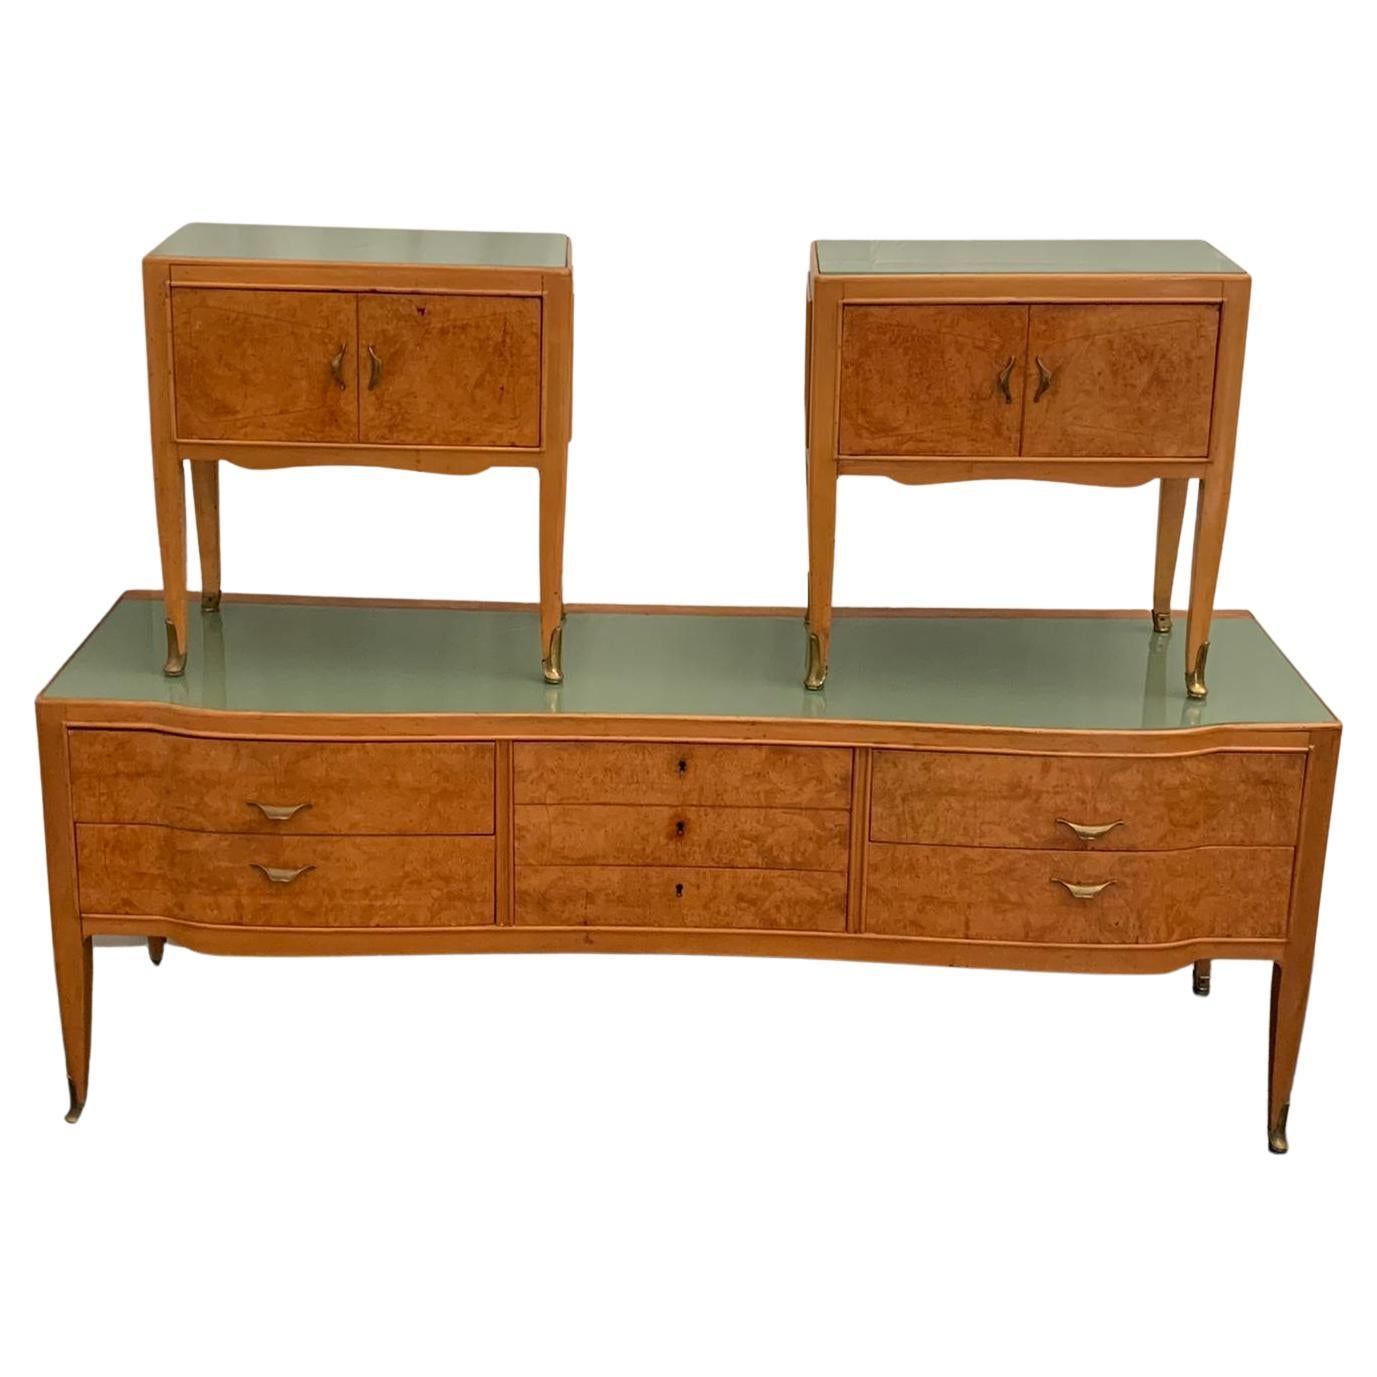 Dresser from S.A.F.F.A, 1950s